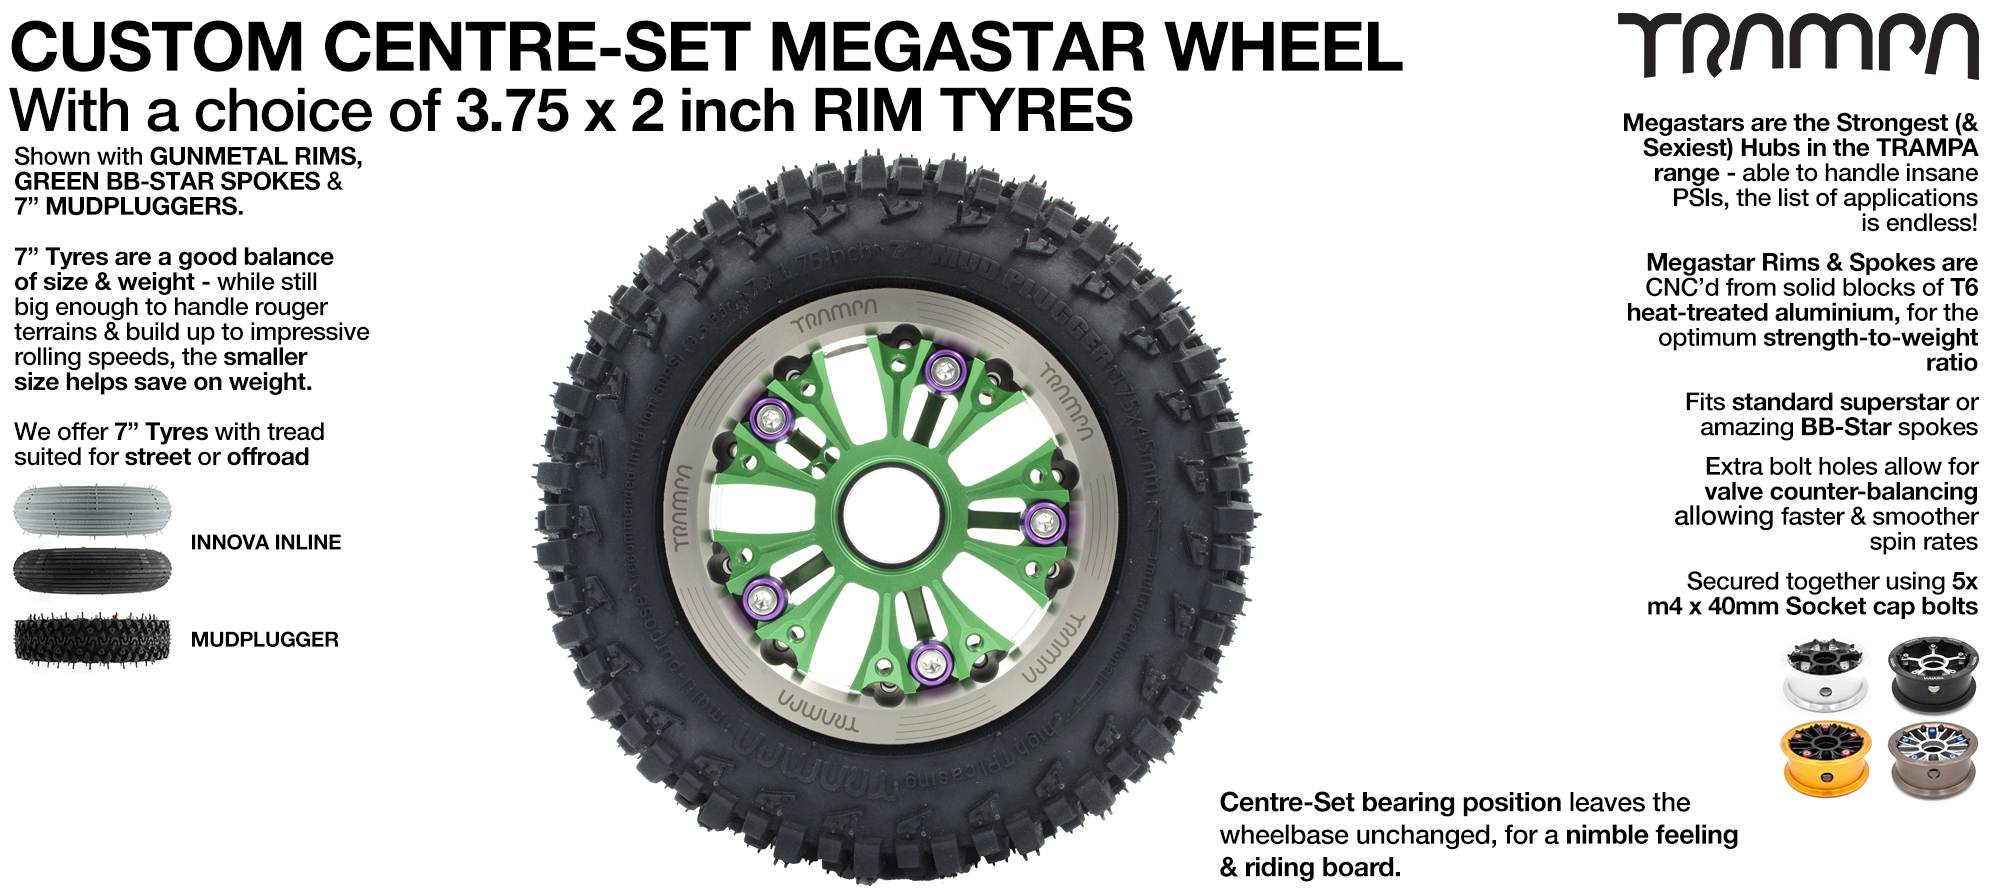 CENTER- SET MEGASTAR 8 Hub with 7 Inch Tyres